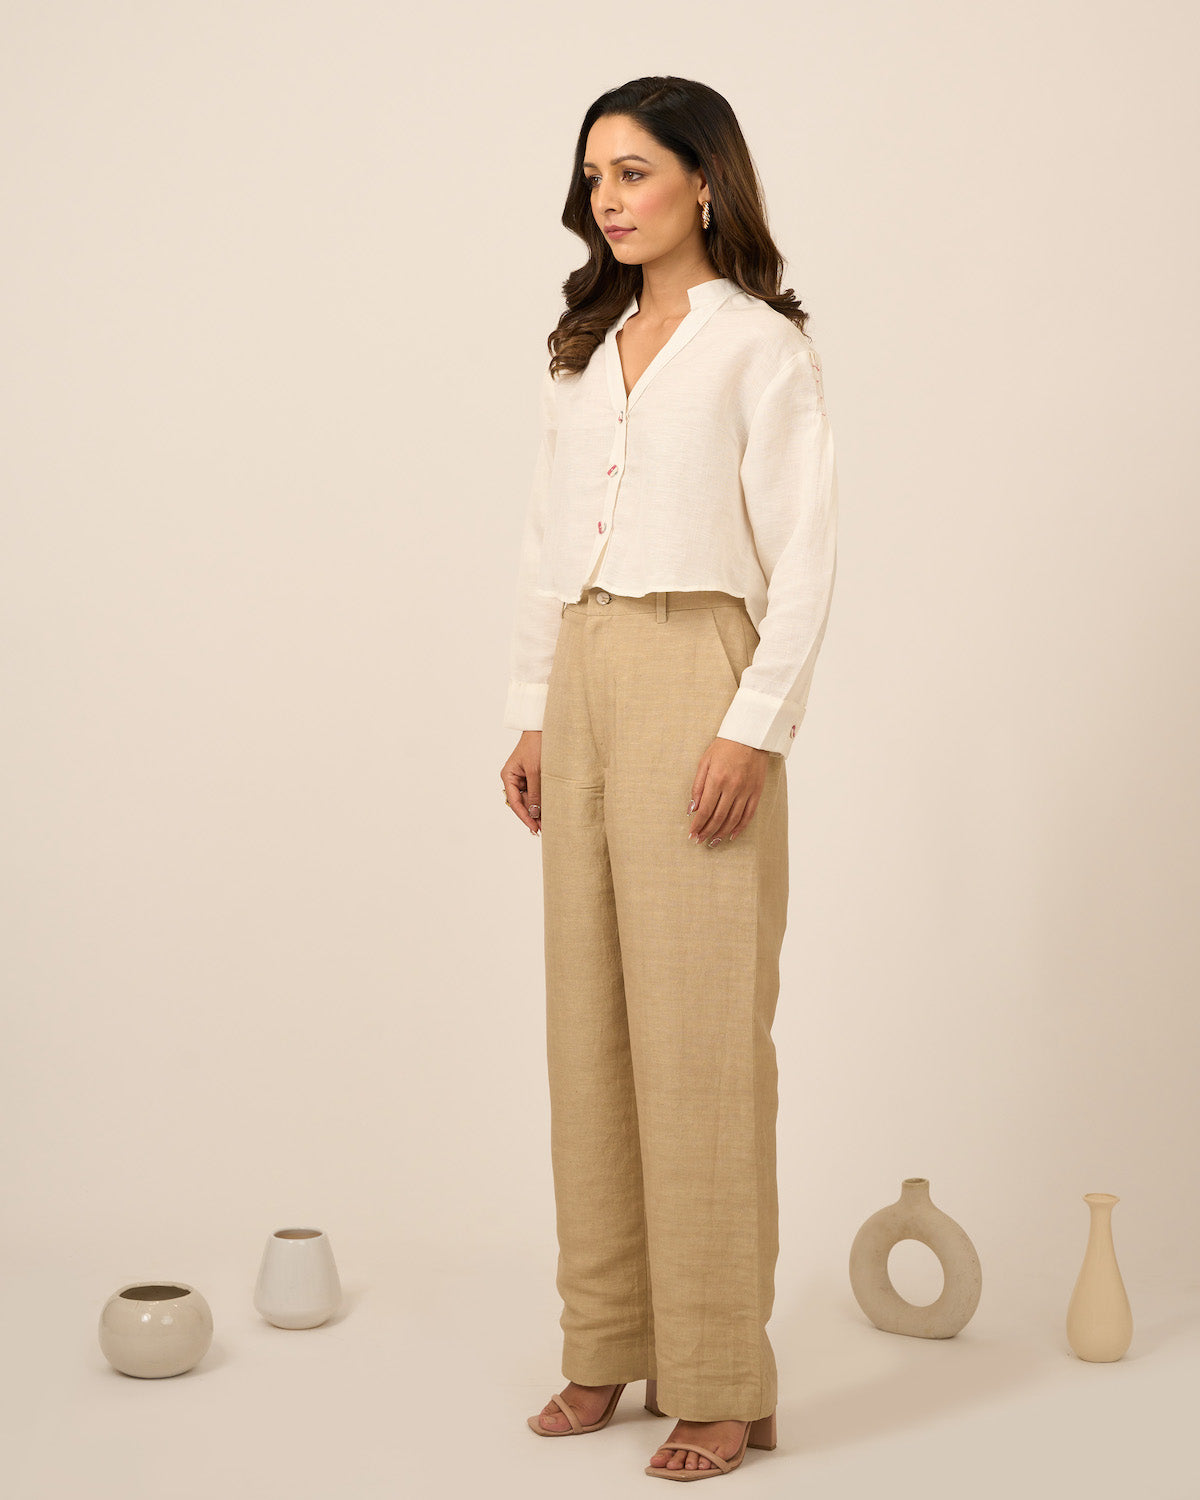 Ivory Linen Crop top and Pants Set